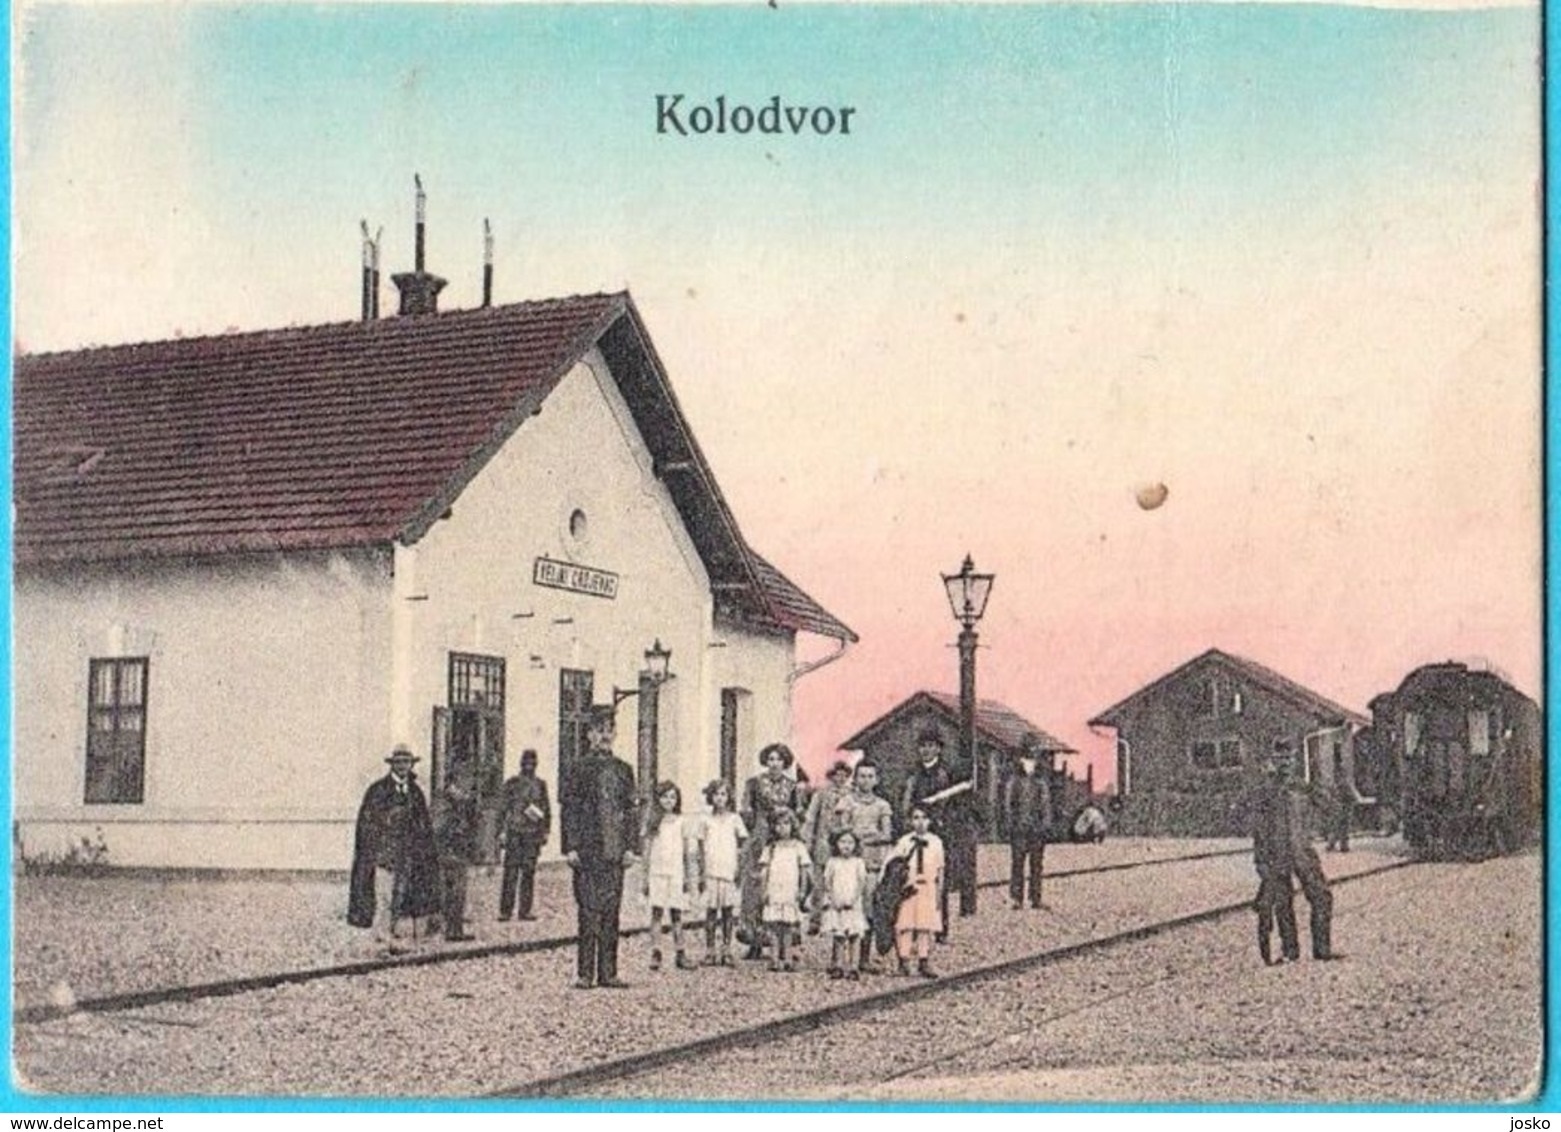 620_002 VELIKI GRDJEVAC - Kolodvor -Bahnhof - Railway Station  Croatia  Travelled 1914. Bjelovar Daruvar Stazione Ferroviaria.jpg